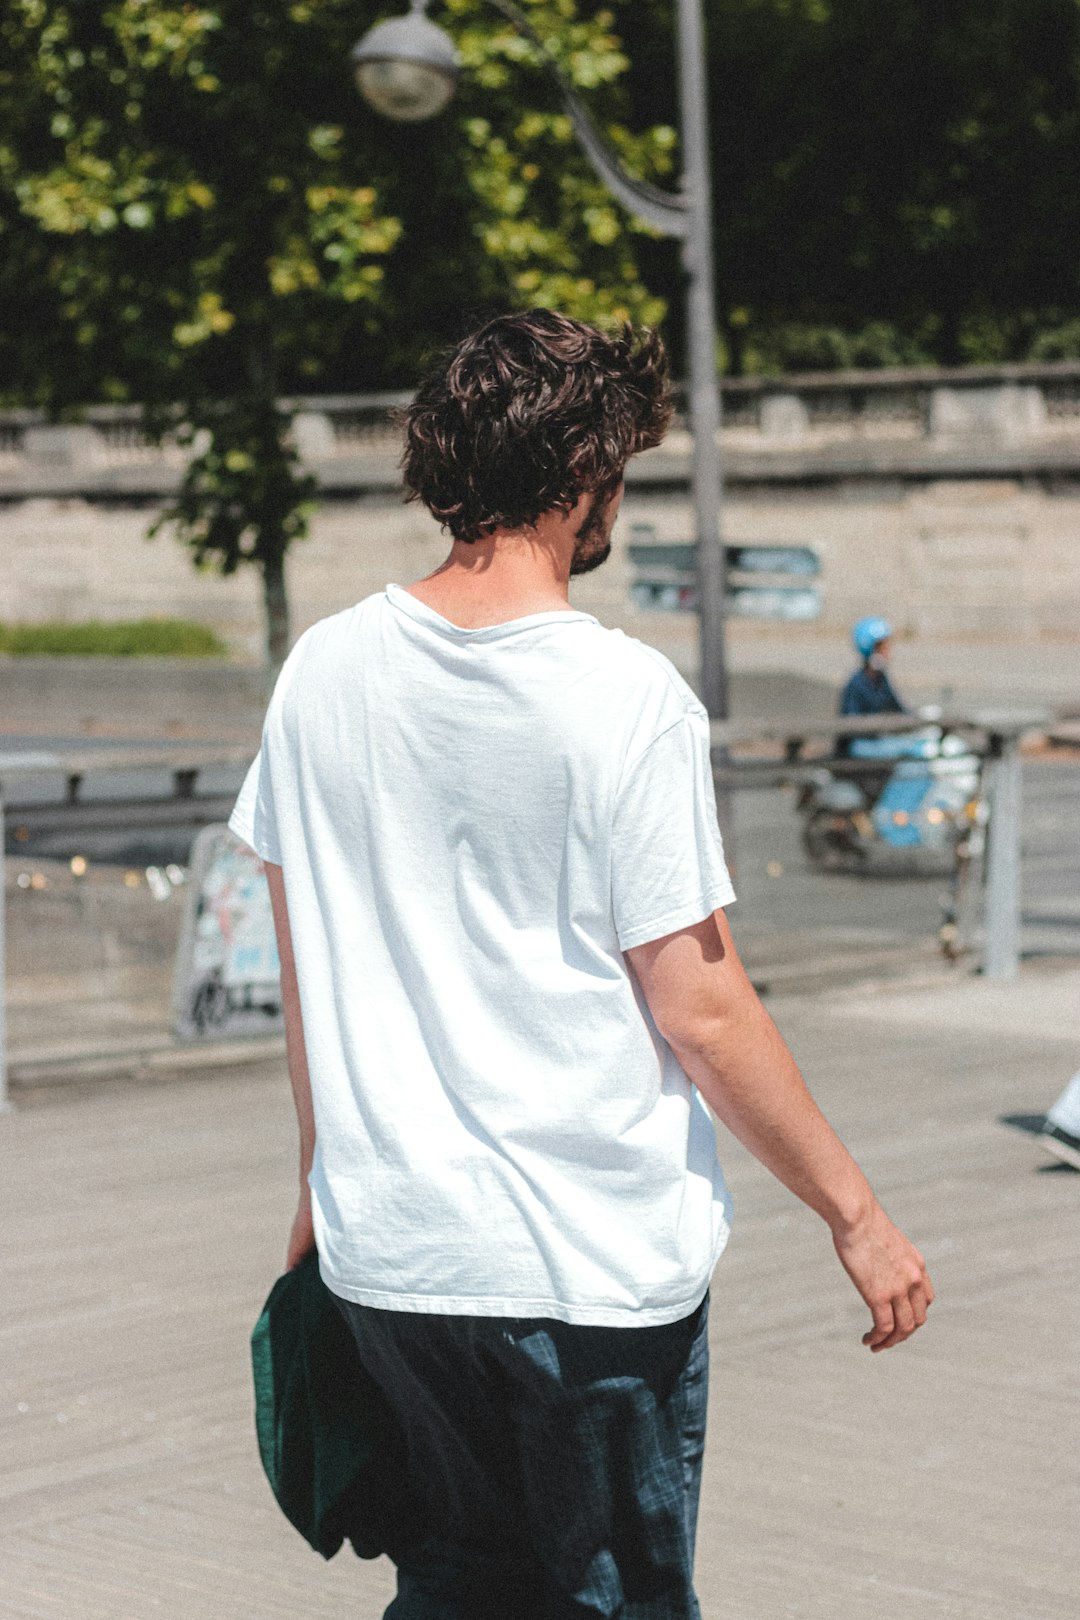 Skateboarding photo spot Paris Boulevard de Bercy